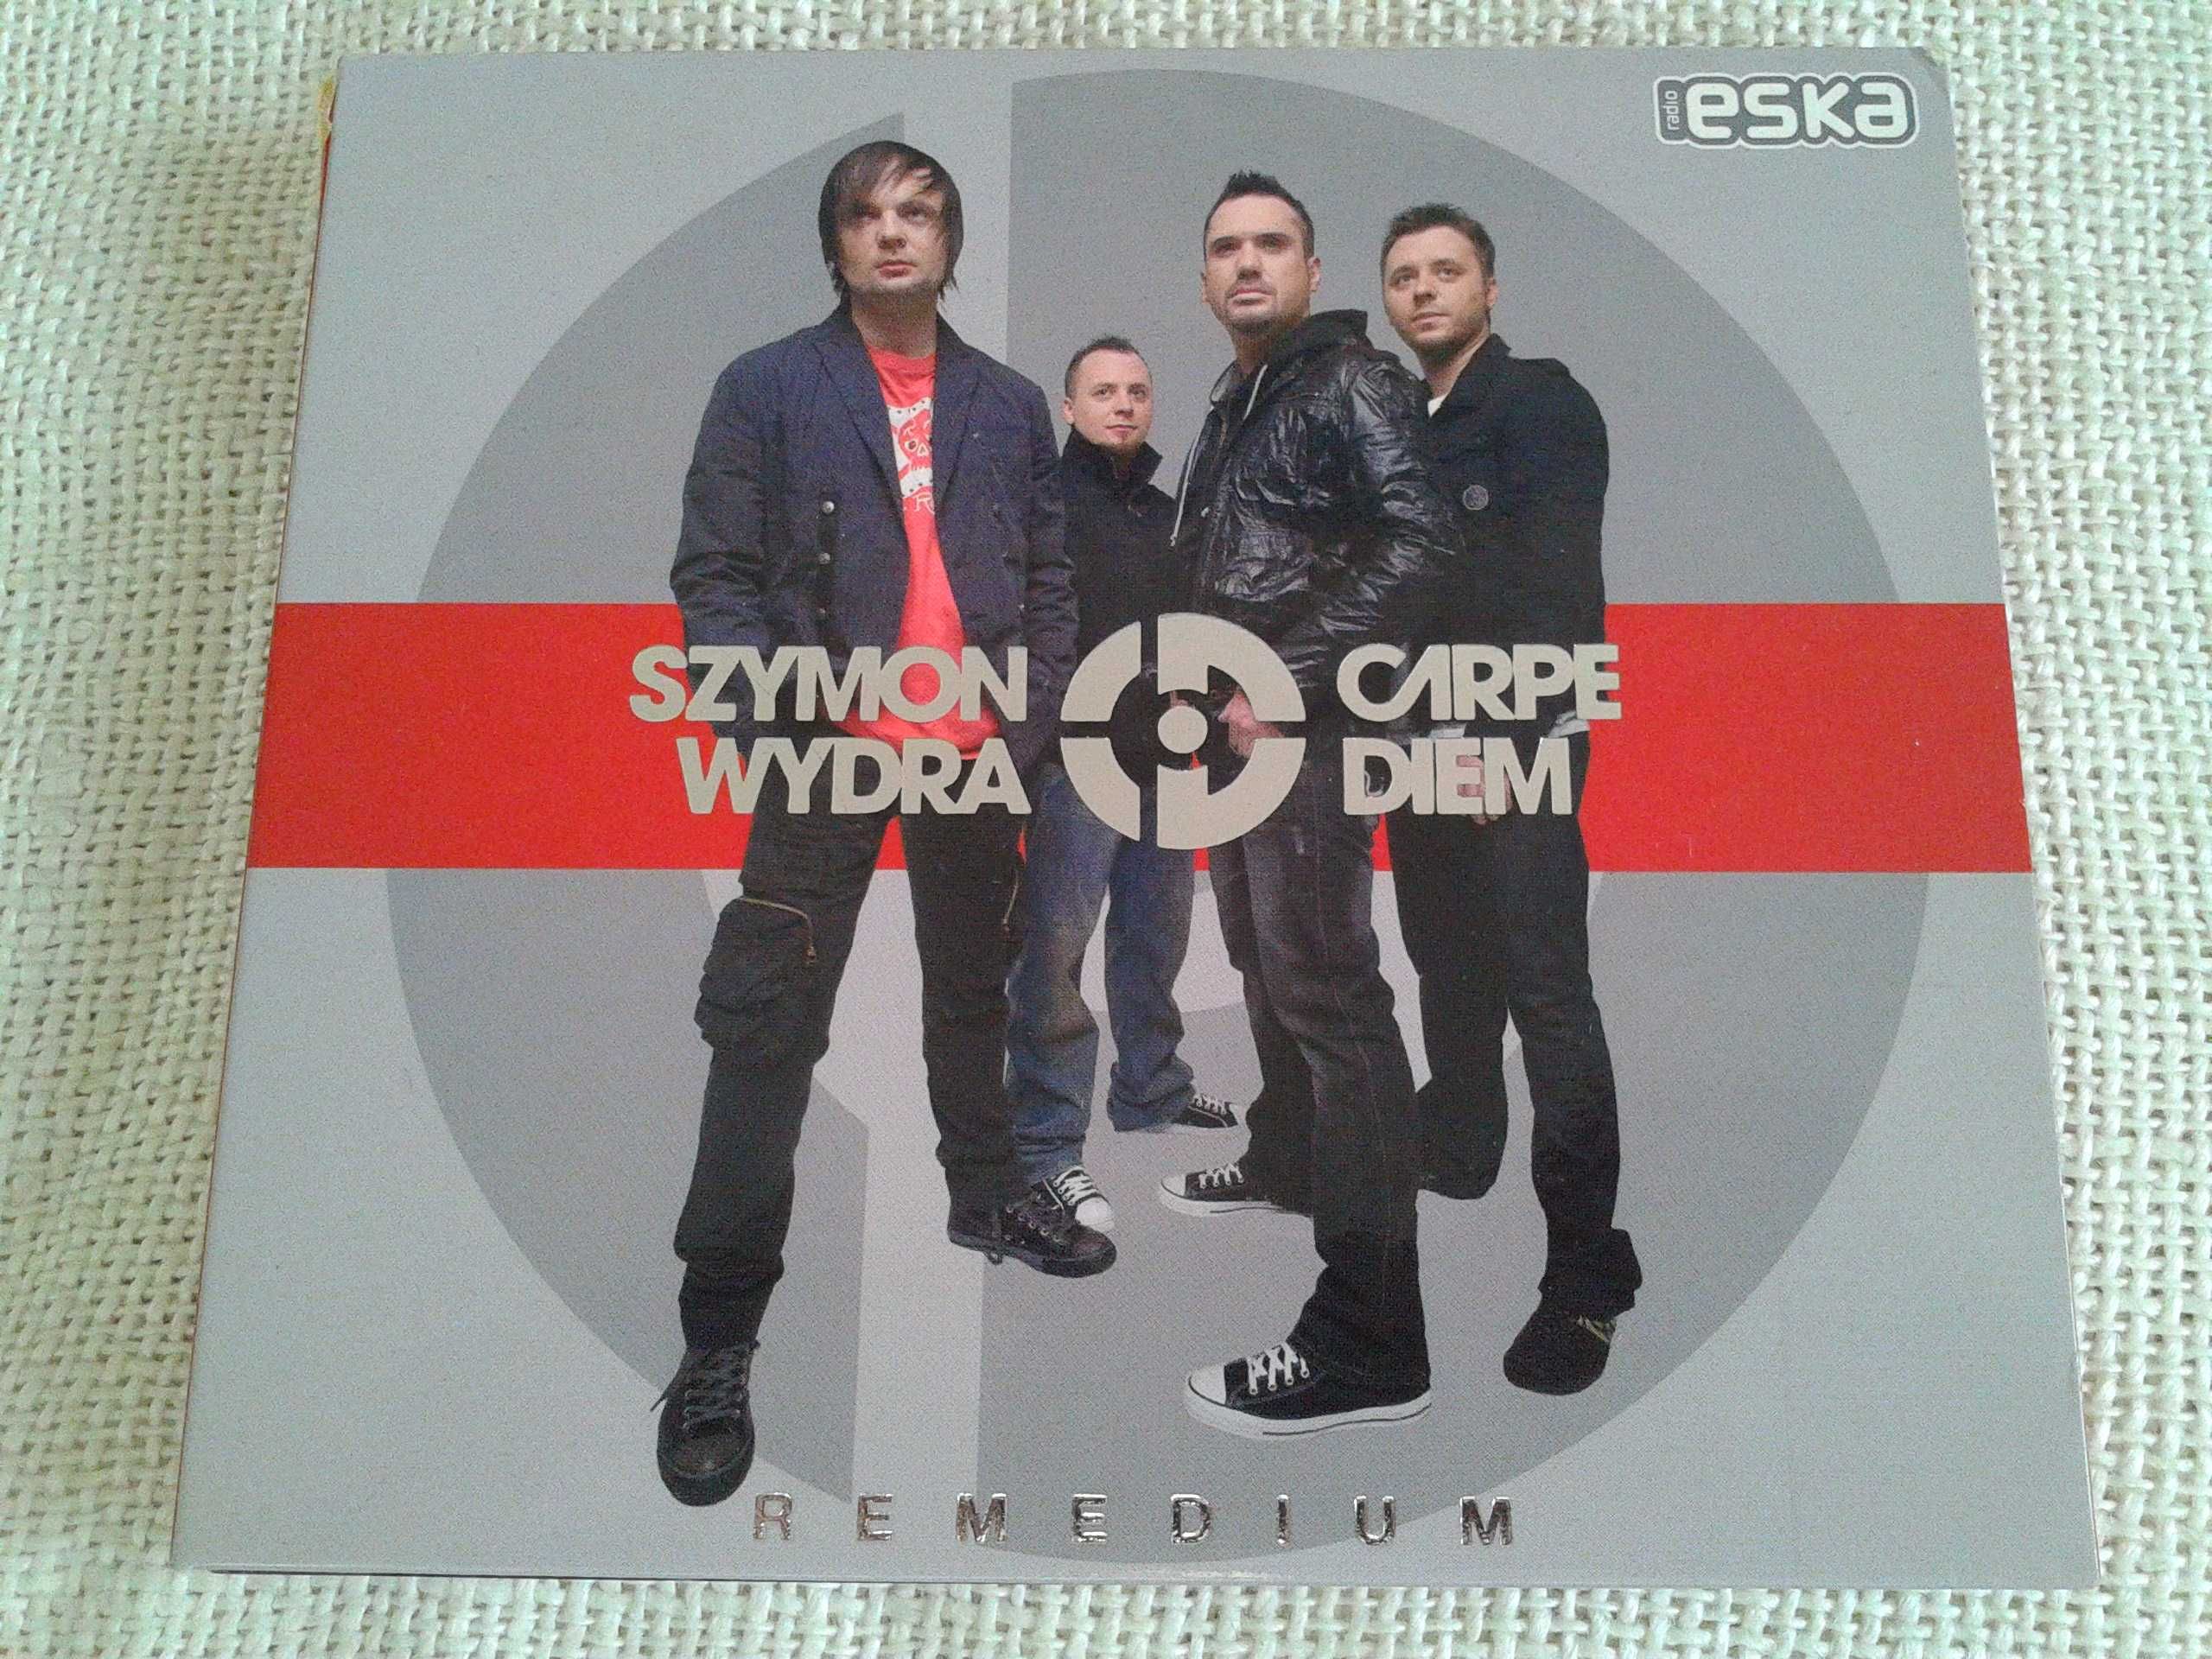 Szymon Wydra & Carpe Diem – Remedium  CD